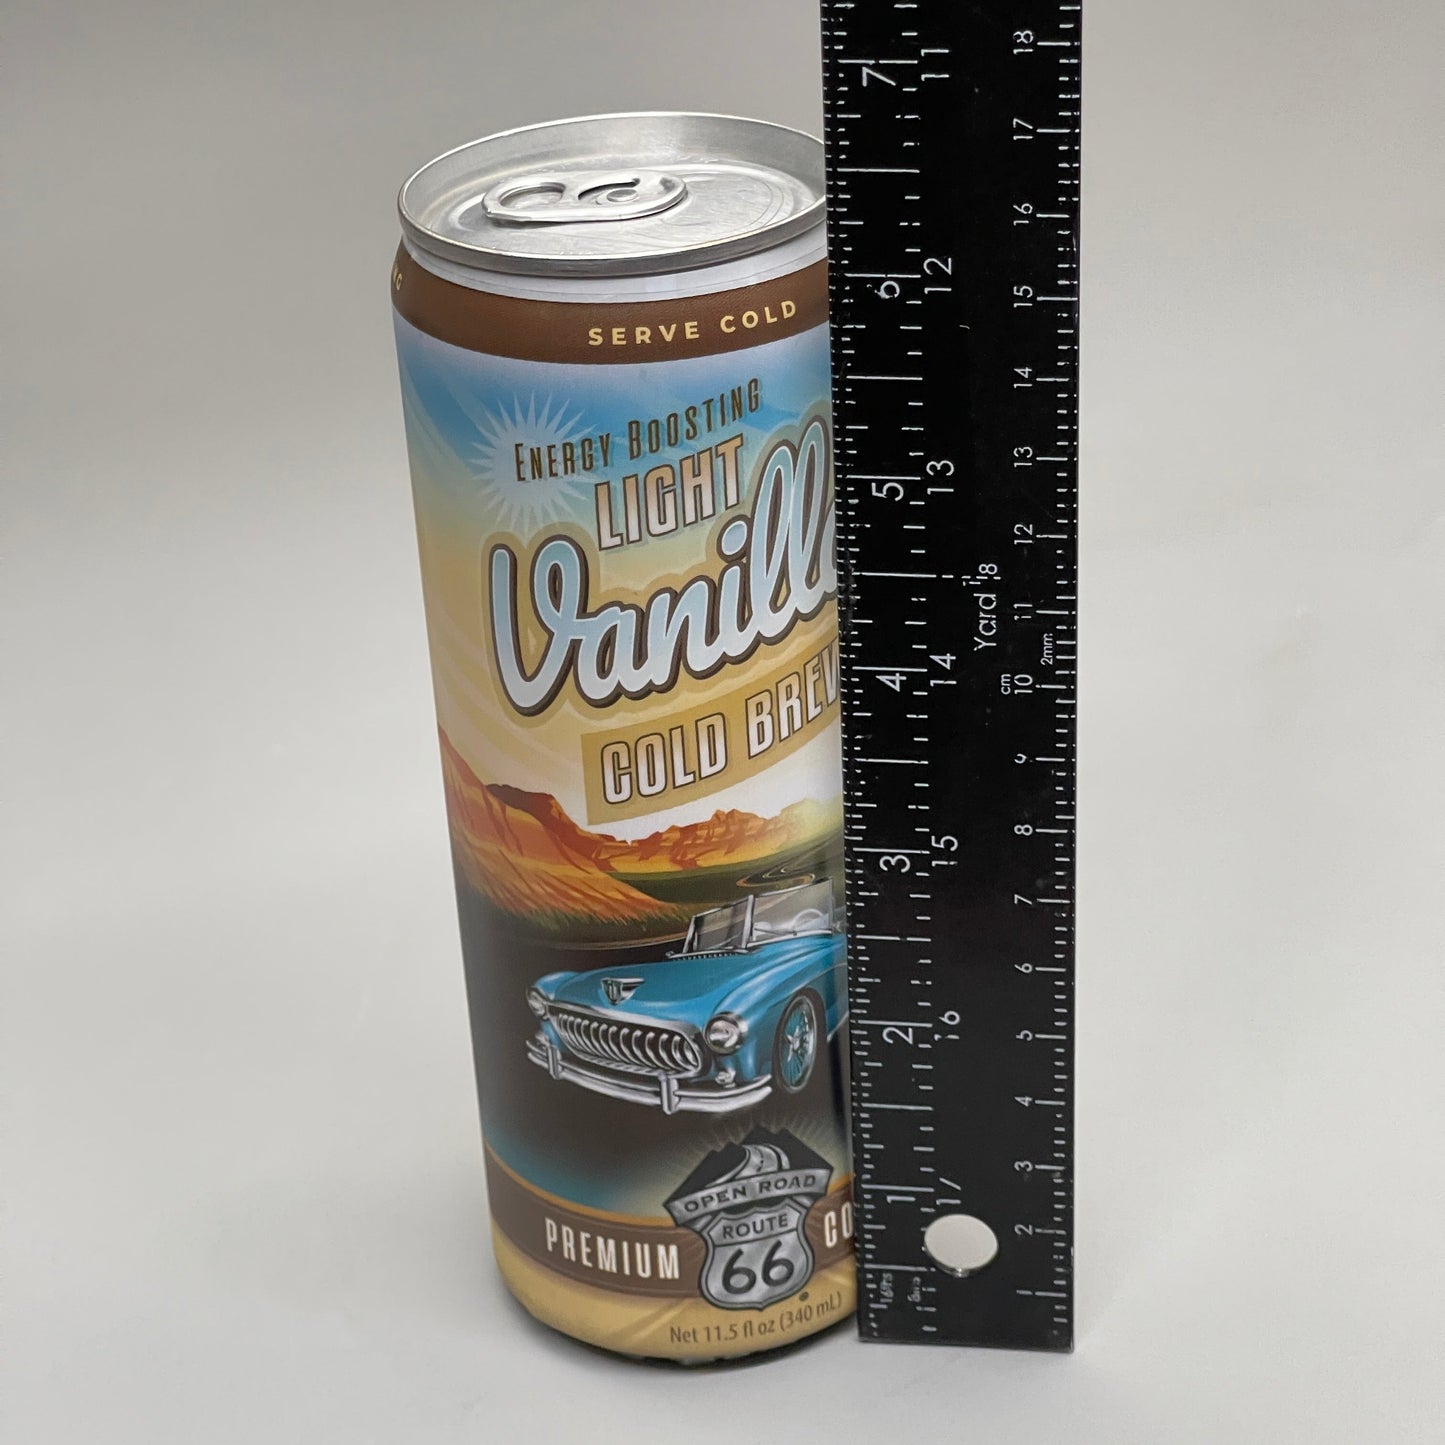 ZA@ 60 CANS! OPEN ROAD ROUTE 66 Energy Boosting Light Vanilla Cold Brew Drink 11.5 fl oz (06/24) Premium Coffee C